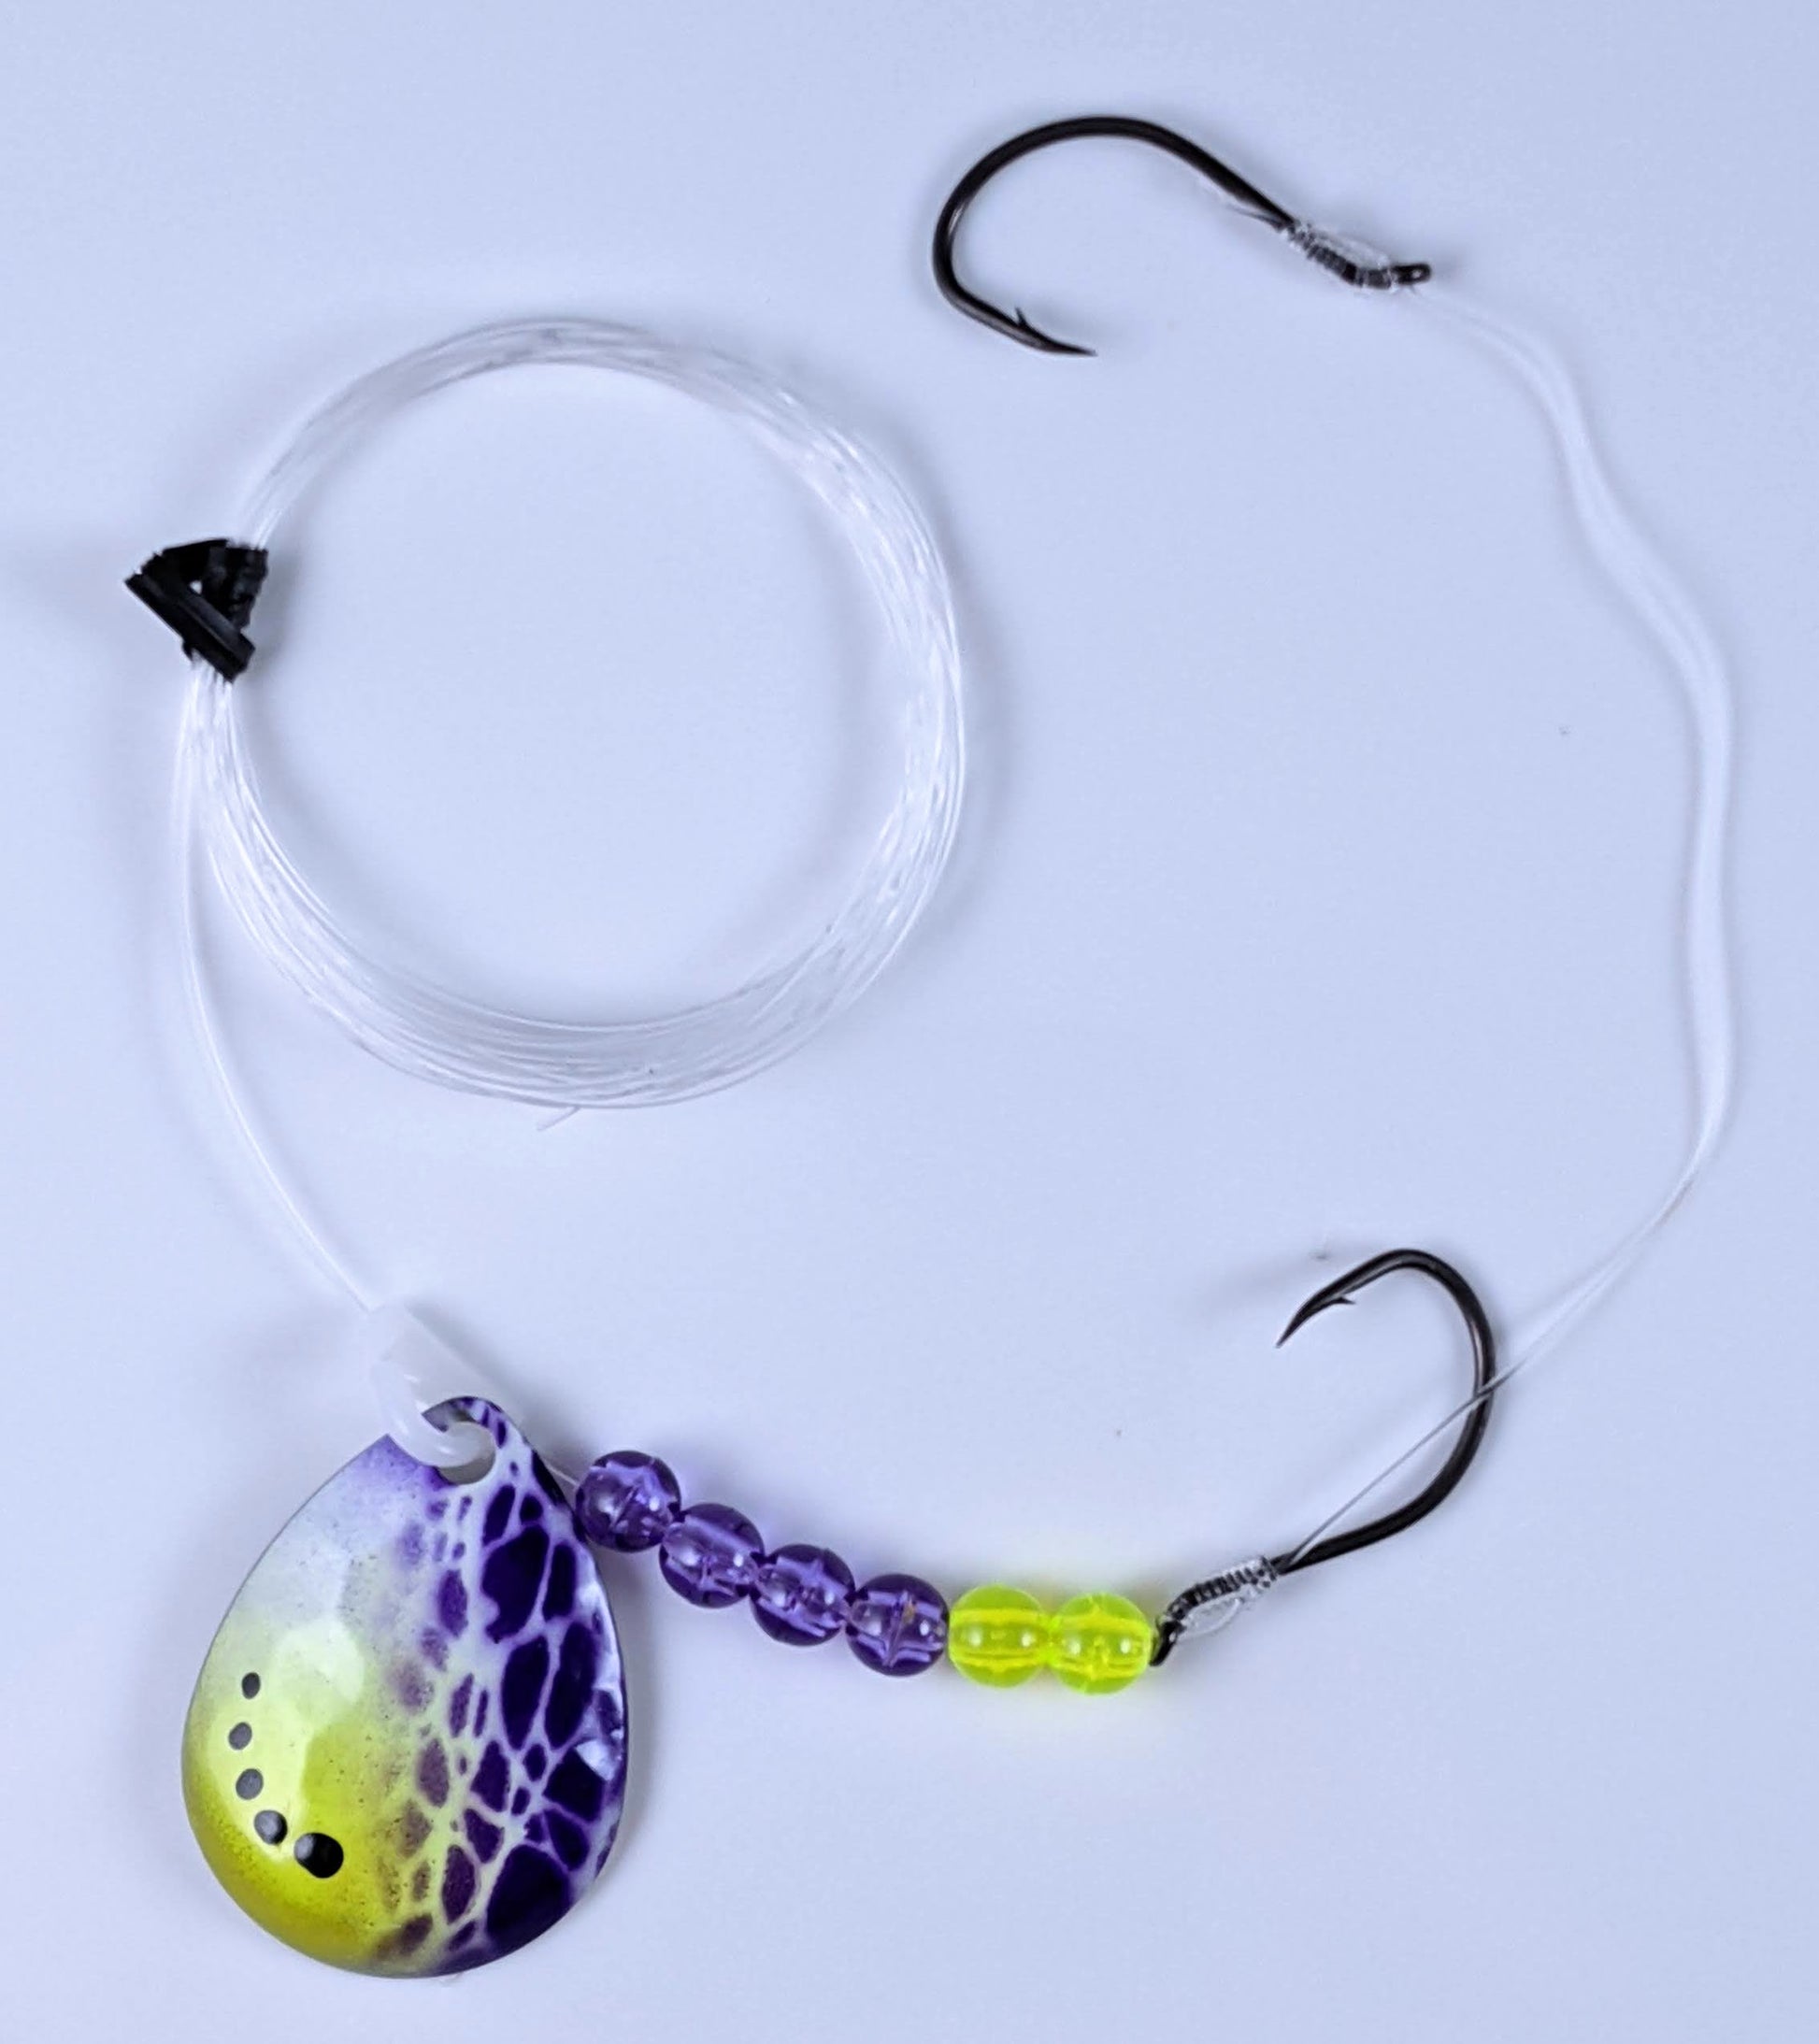 Spinner (Worm Crawler Harness) Prep for Walleye by Rob Barnes